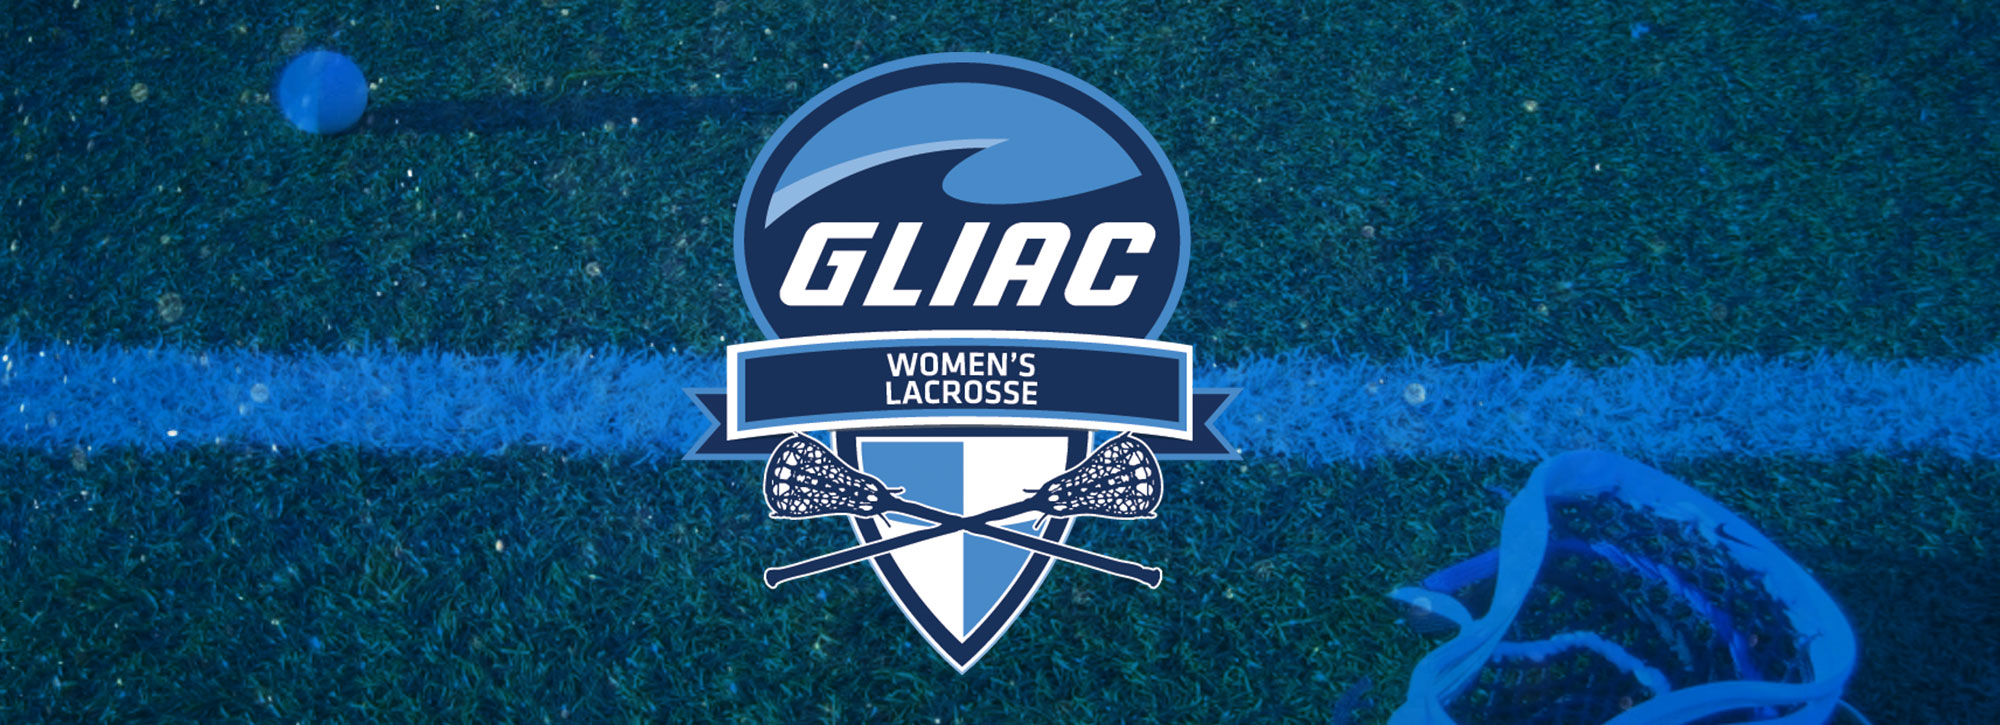 MJ Evagash Named GLIAC Lacrosse Supervisor of Officials